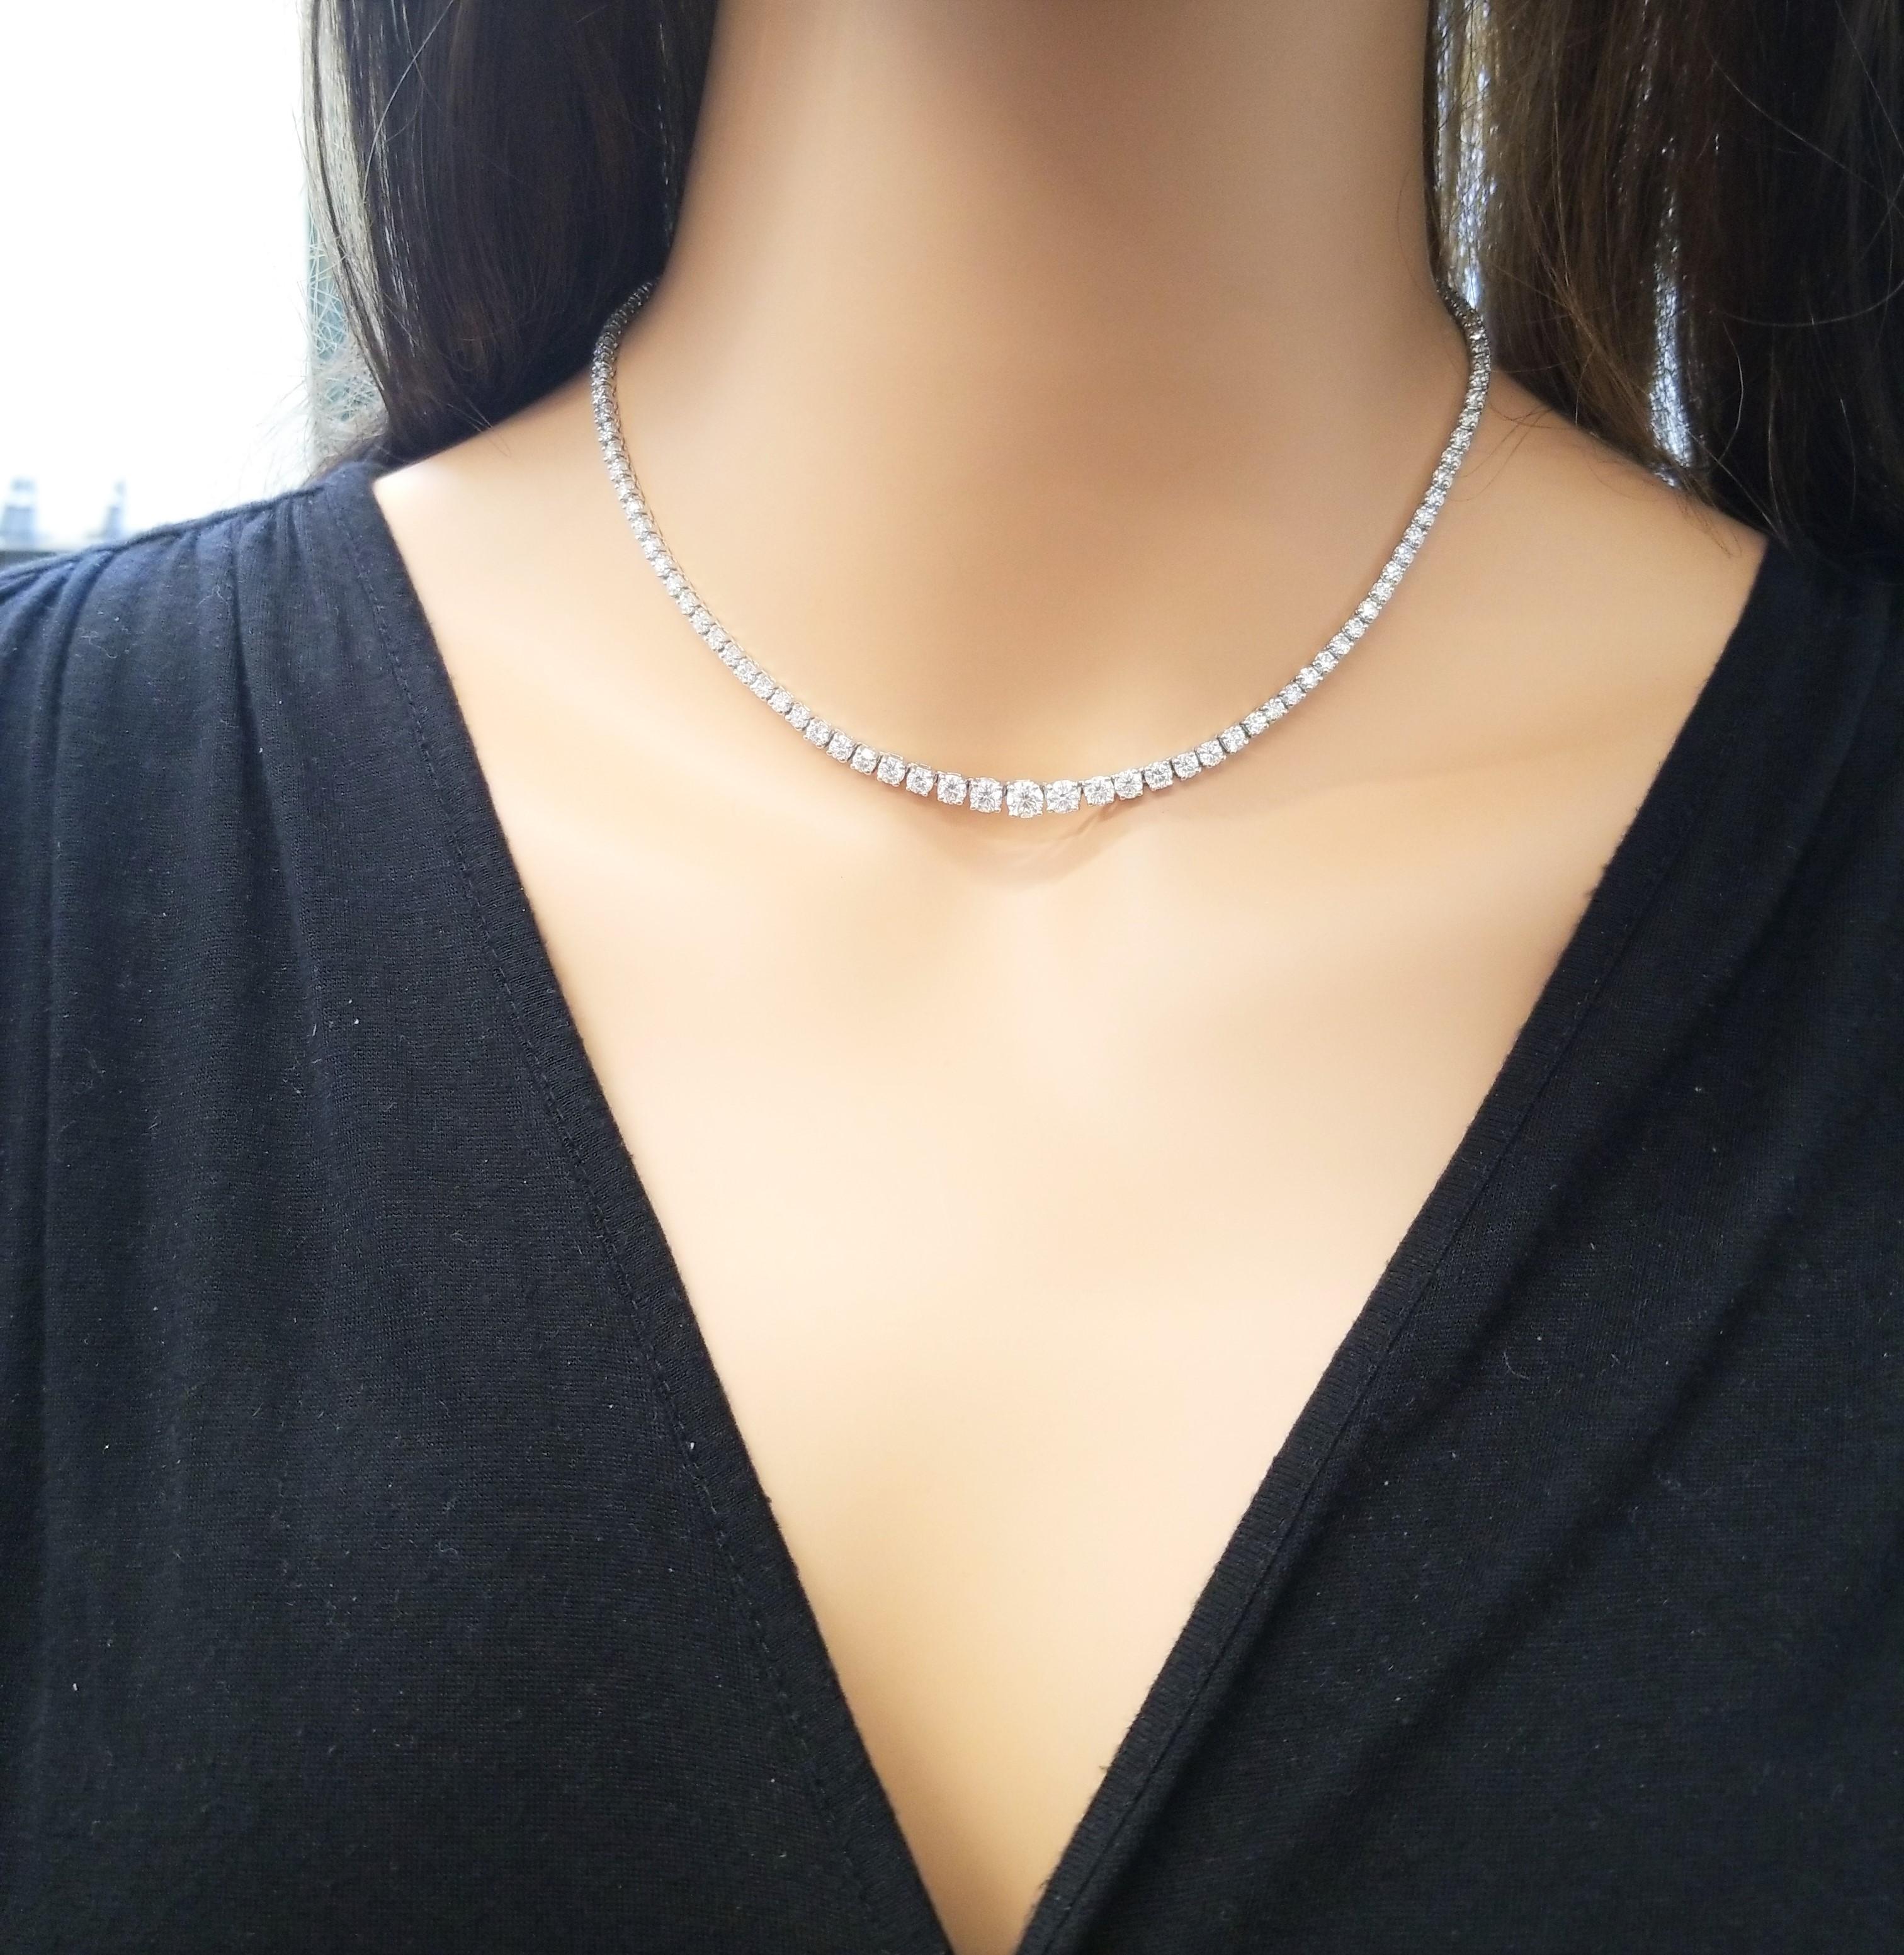 Contemporary 10.16 Carat Total Riviera Diamond Necklace in 14 Karat White Gold